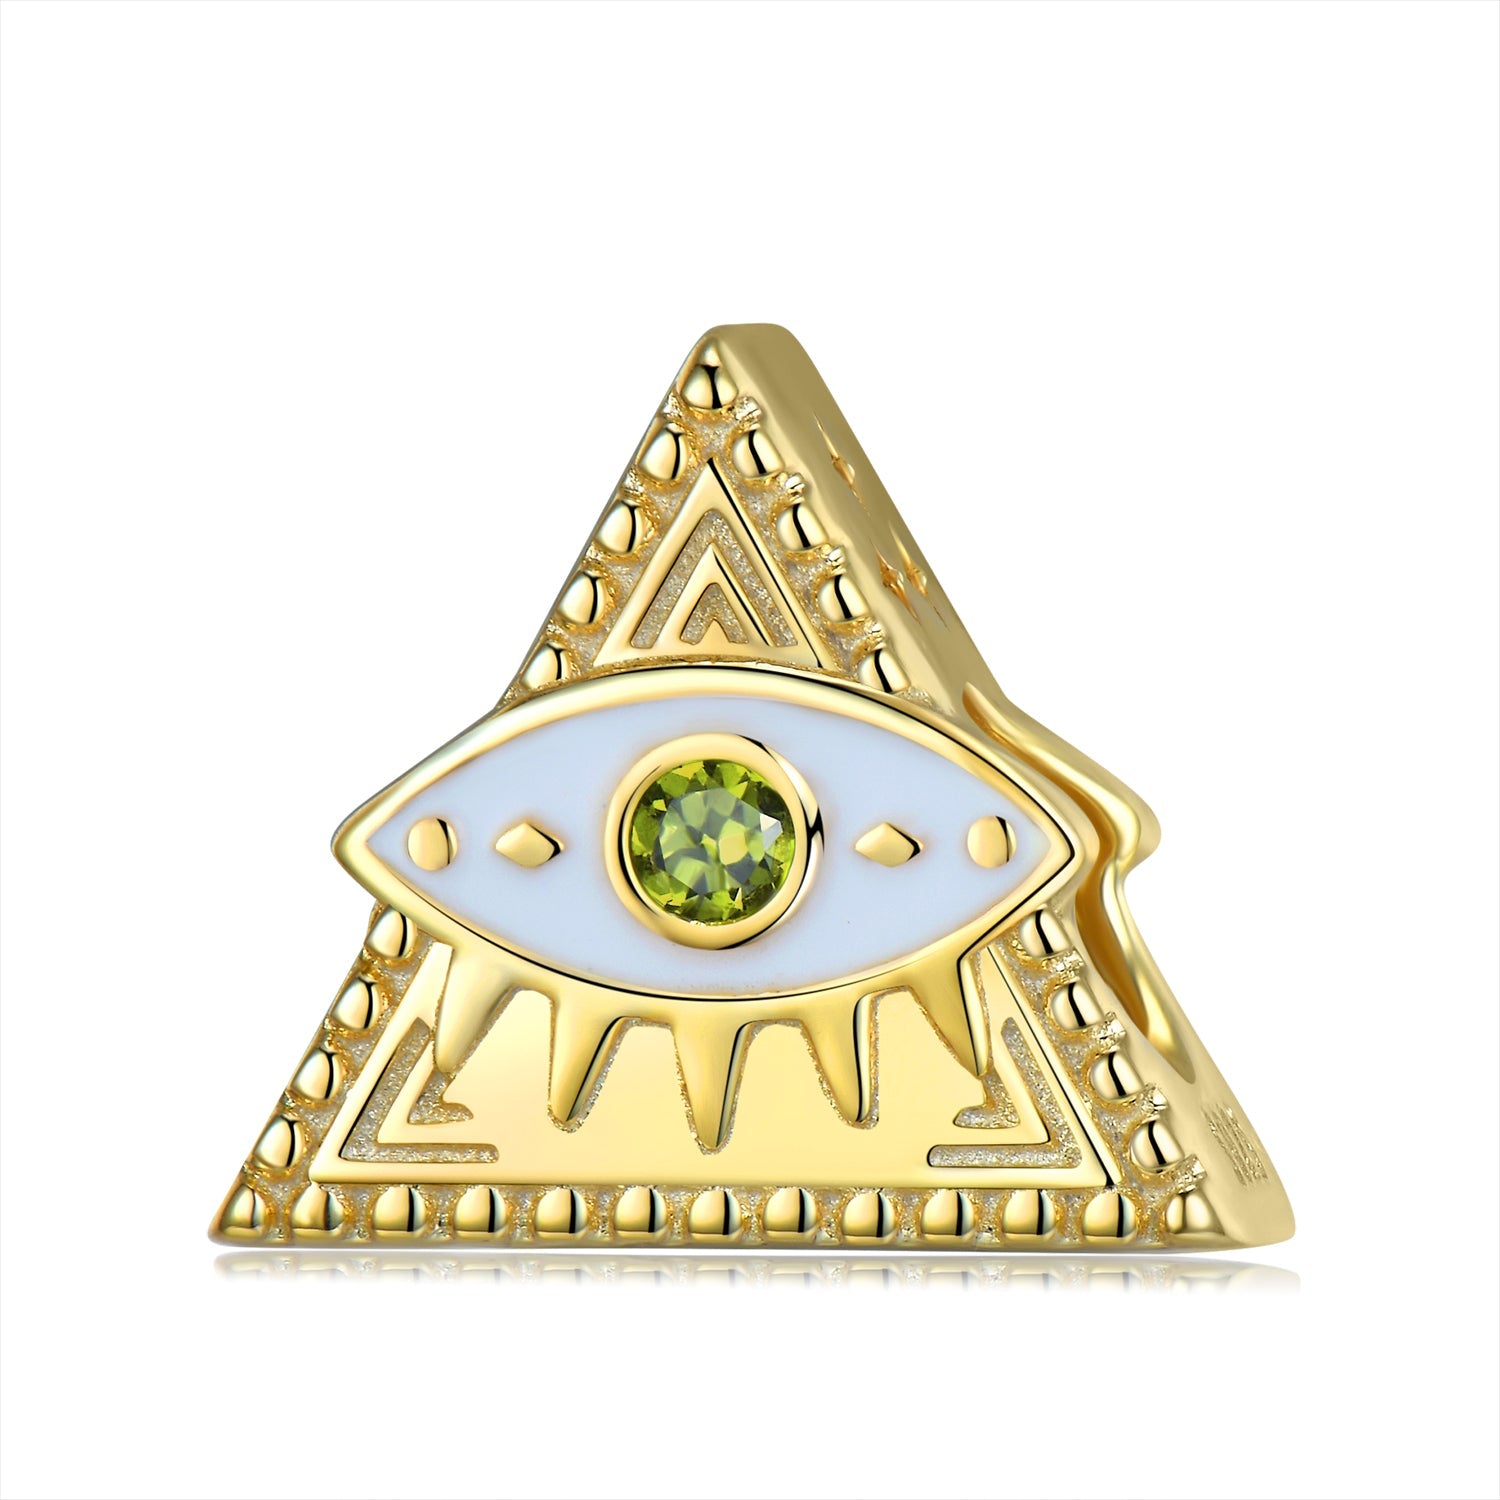 Golden Pyramid "Eye of Providence"